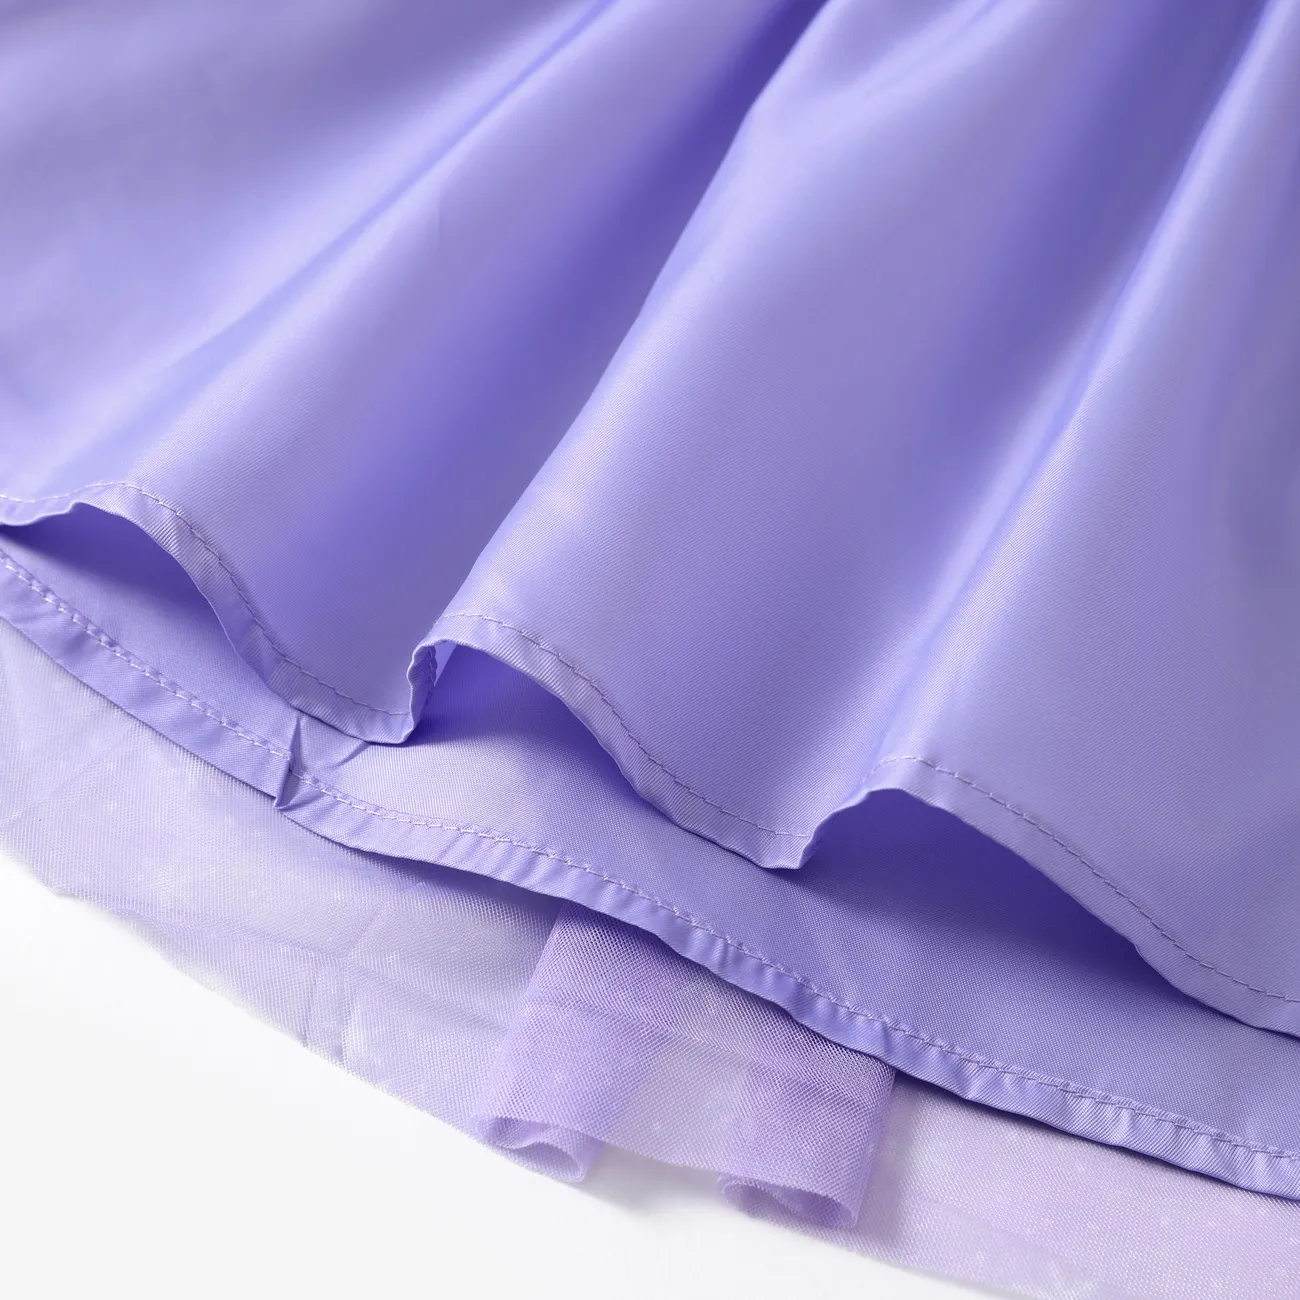 Disney Frozen Niño pequeño Chica Costura de tela Infantil Vestidos Púrpura big image 1